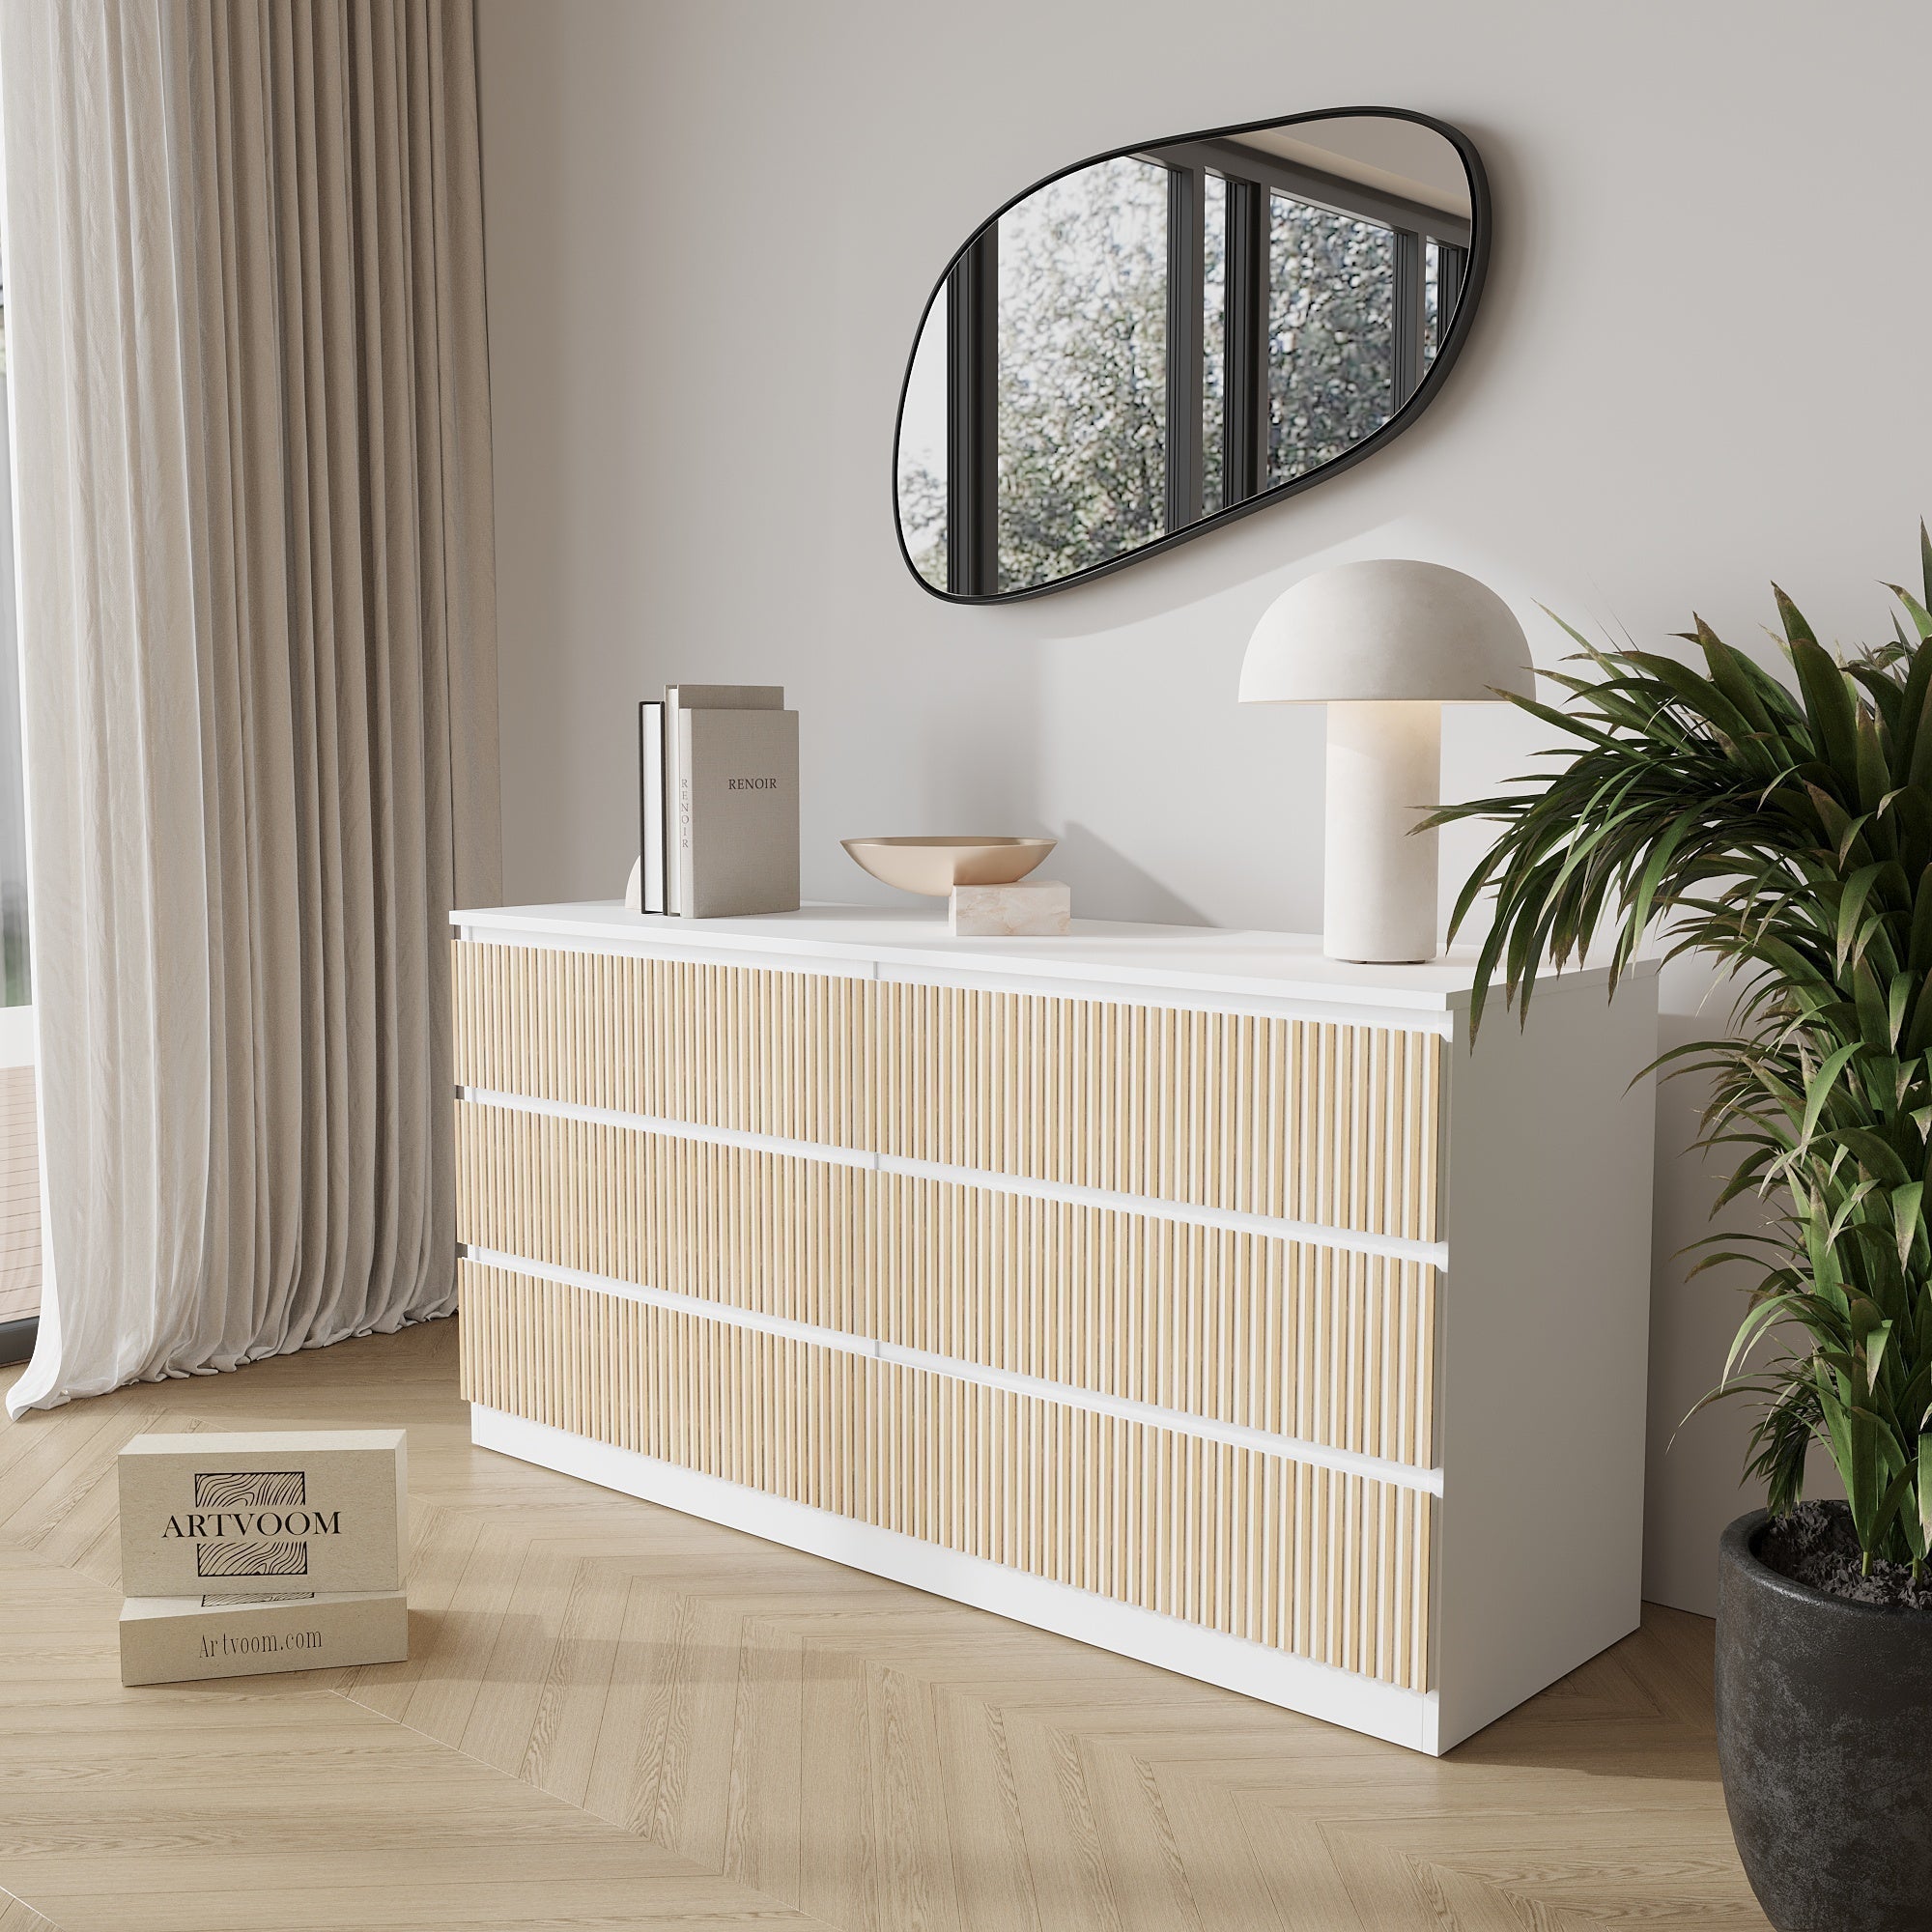 IKEA® Furniture drawer overlay panels